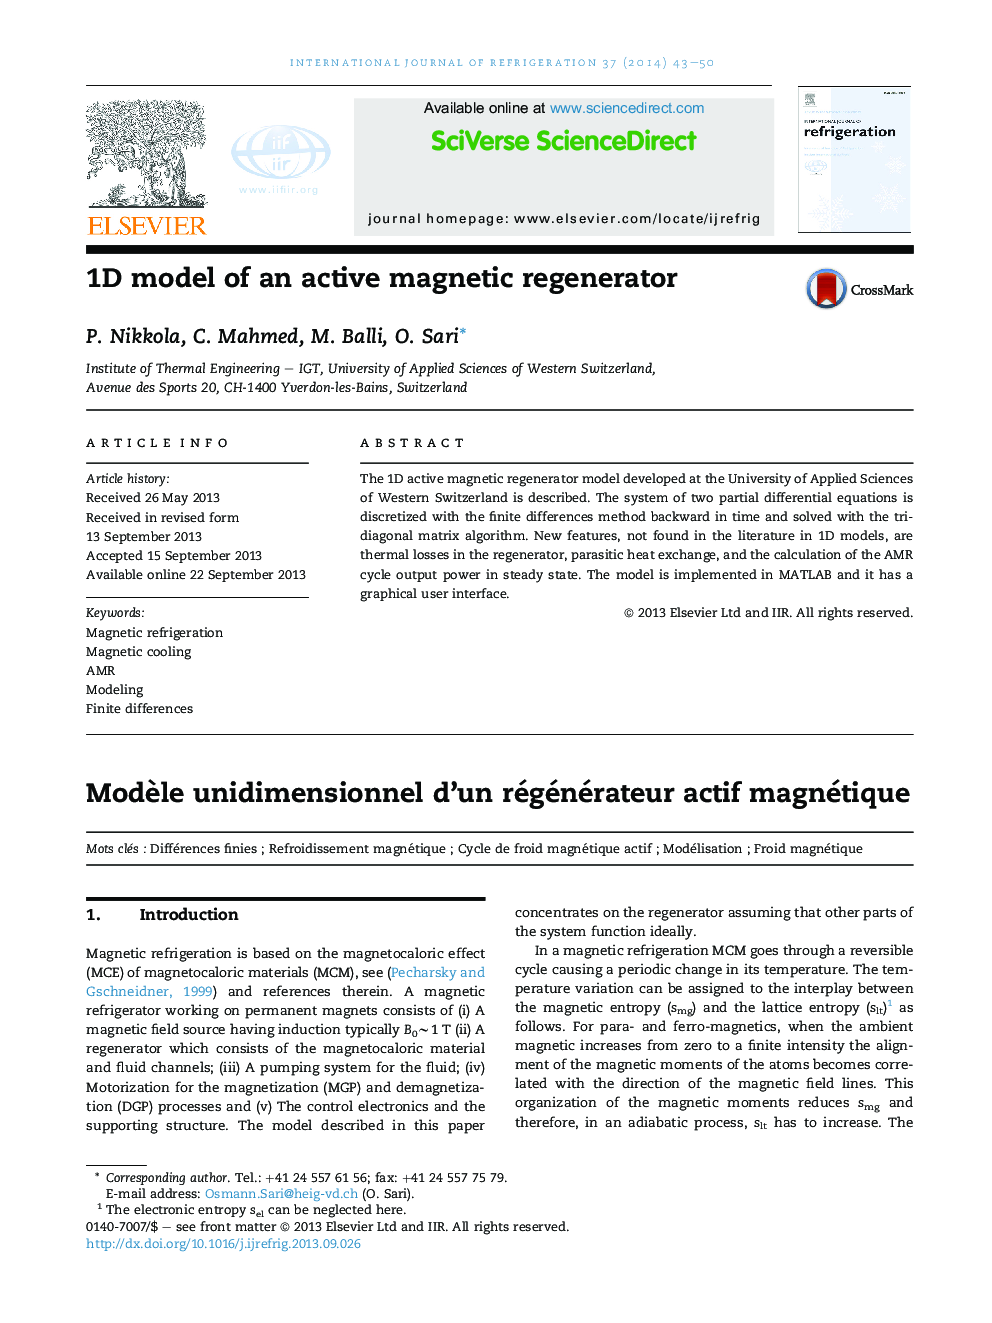 1D model of an active magnetic regenerator